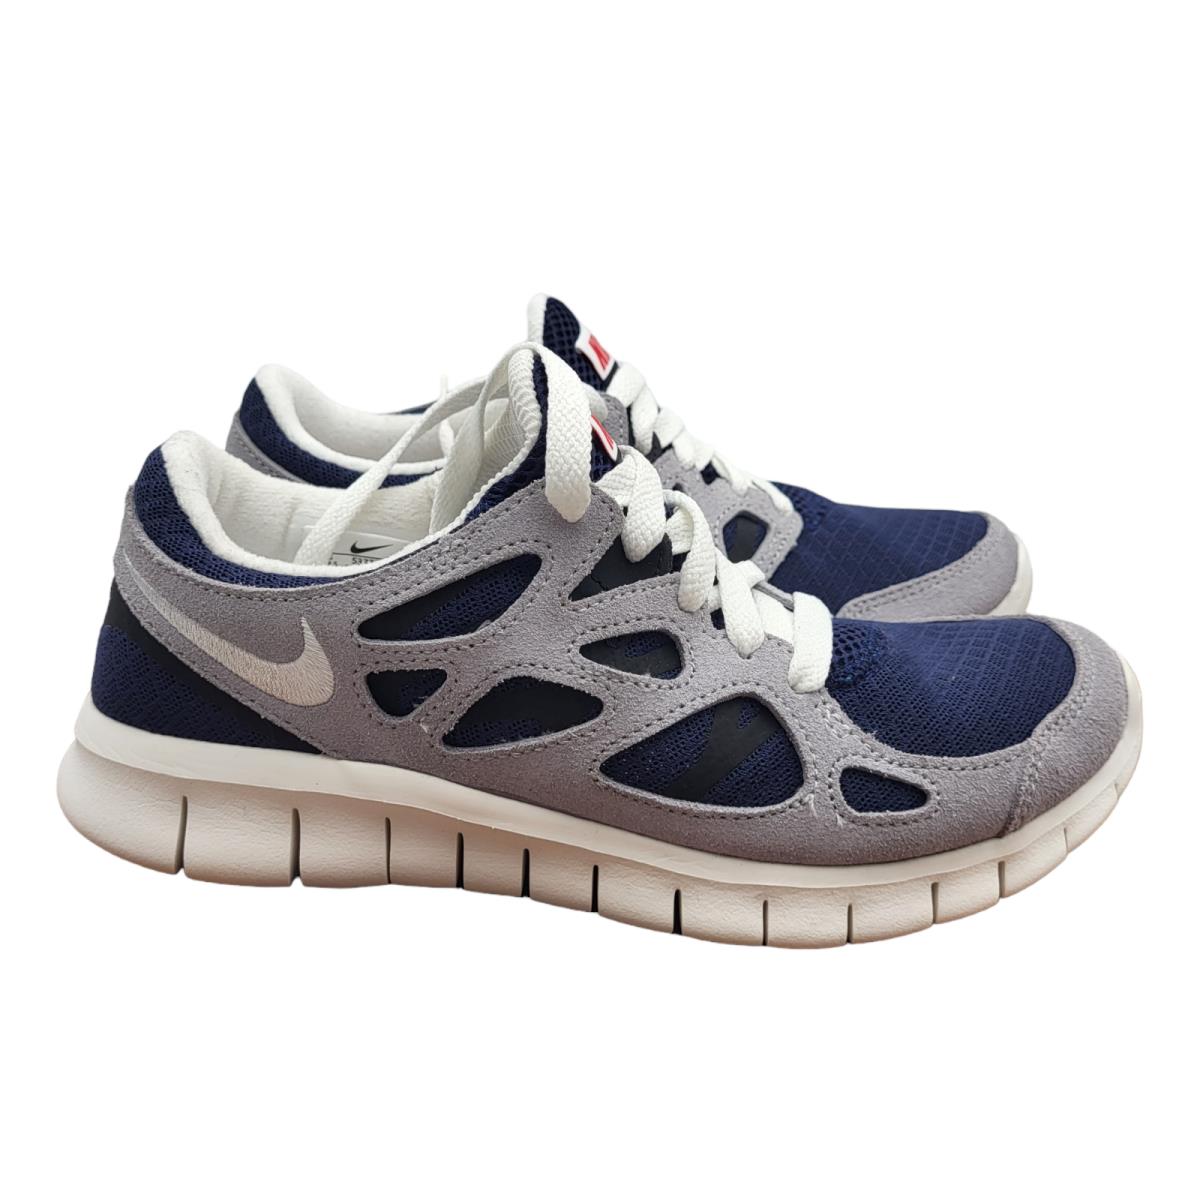 Nike Free Run 2 Running Shoes Mens 6 Midnight Navy Wolf Grey 537732-407